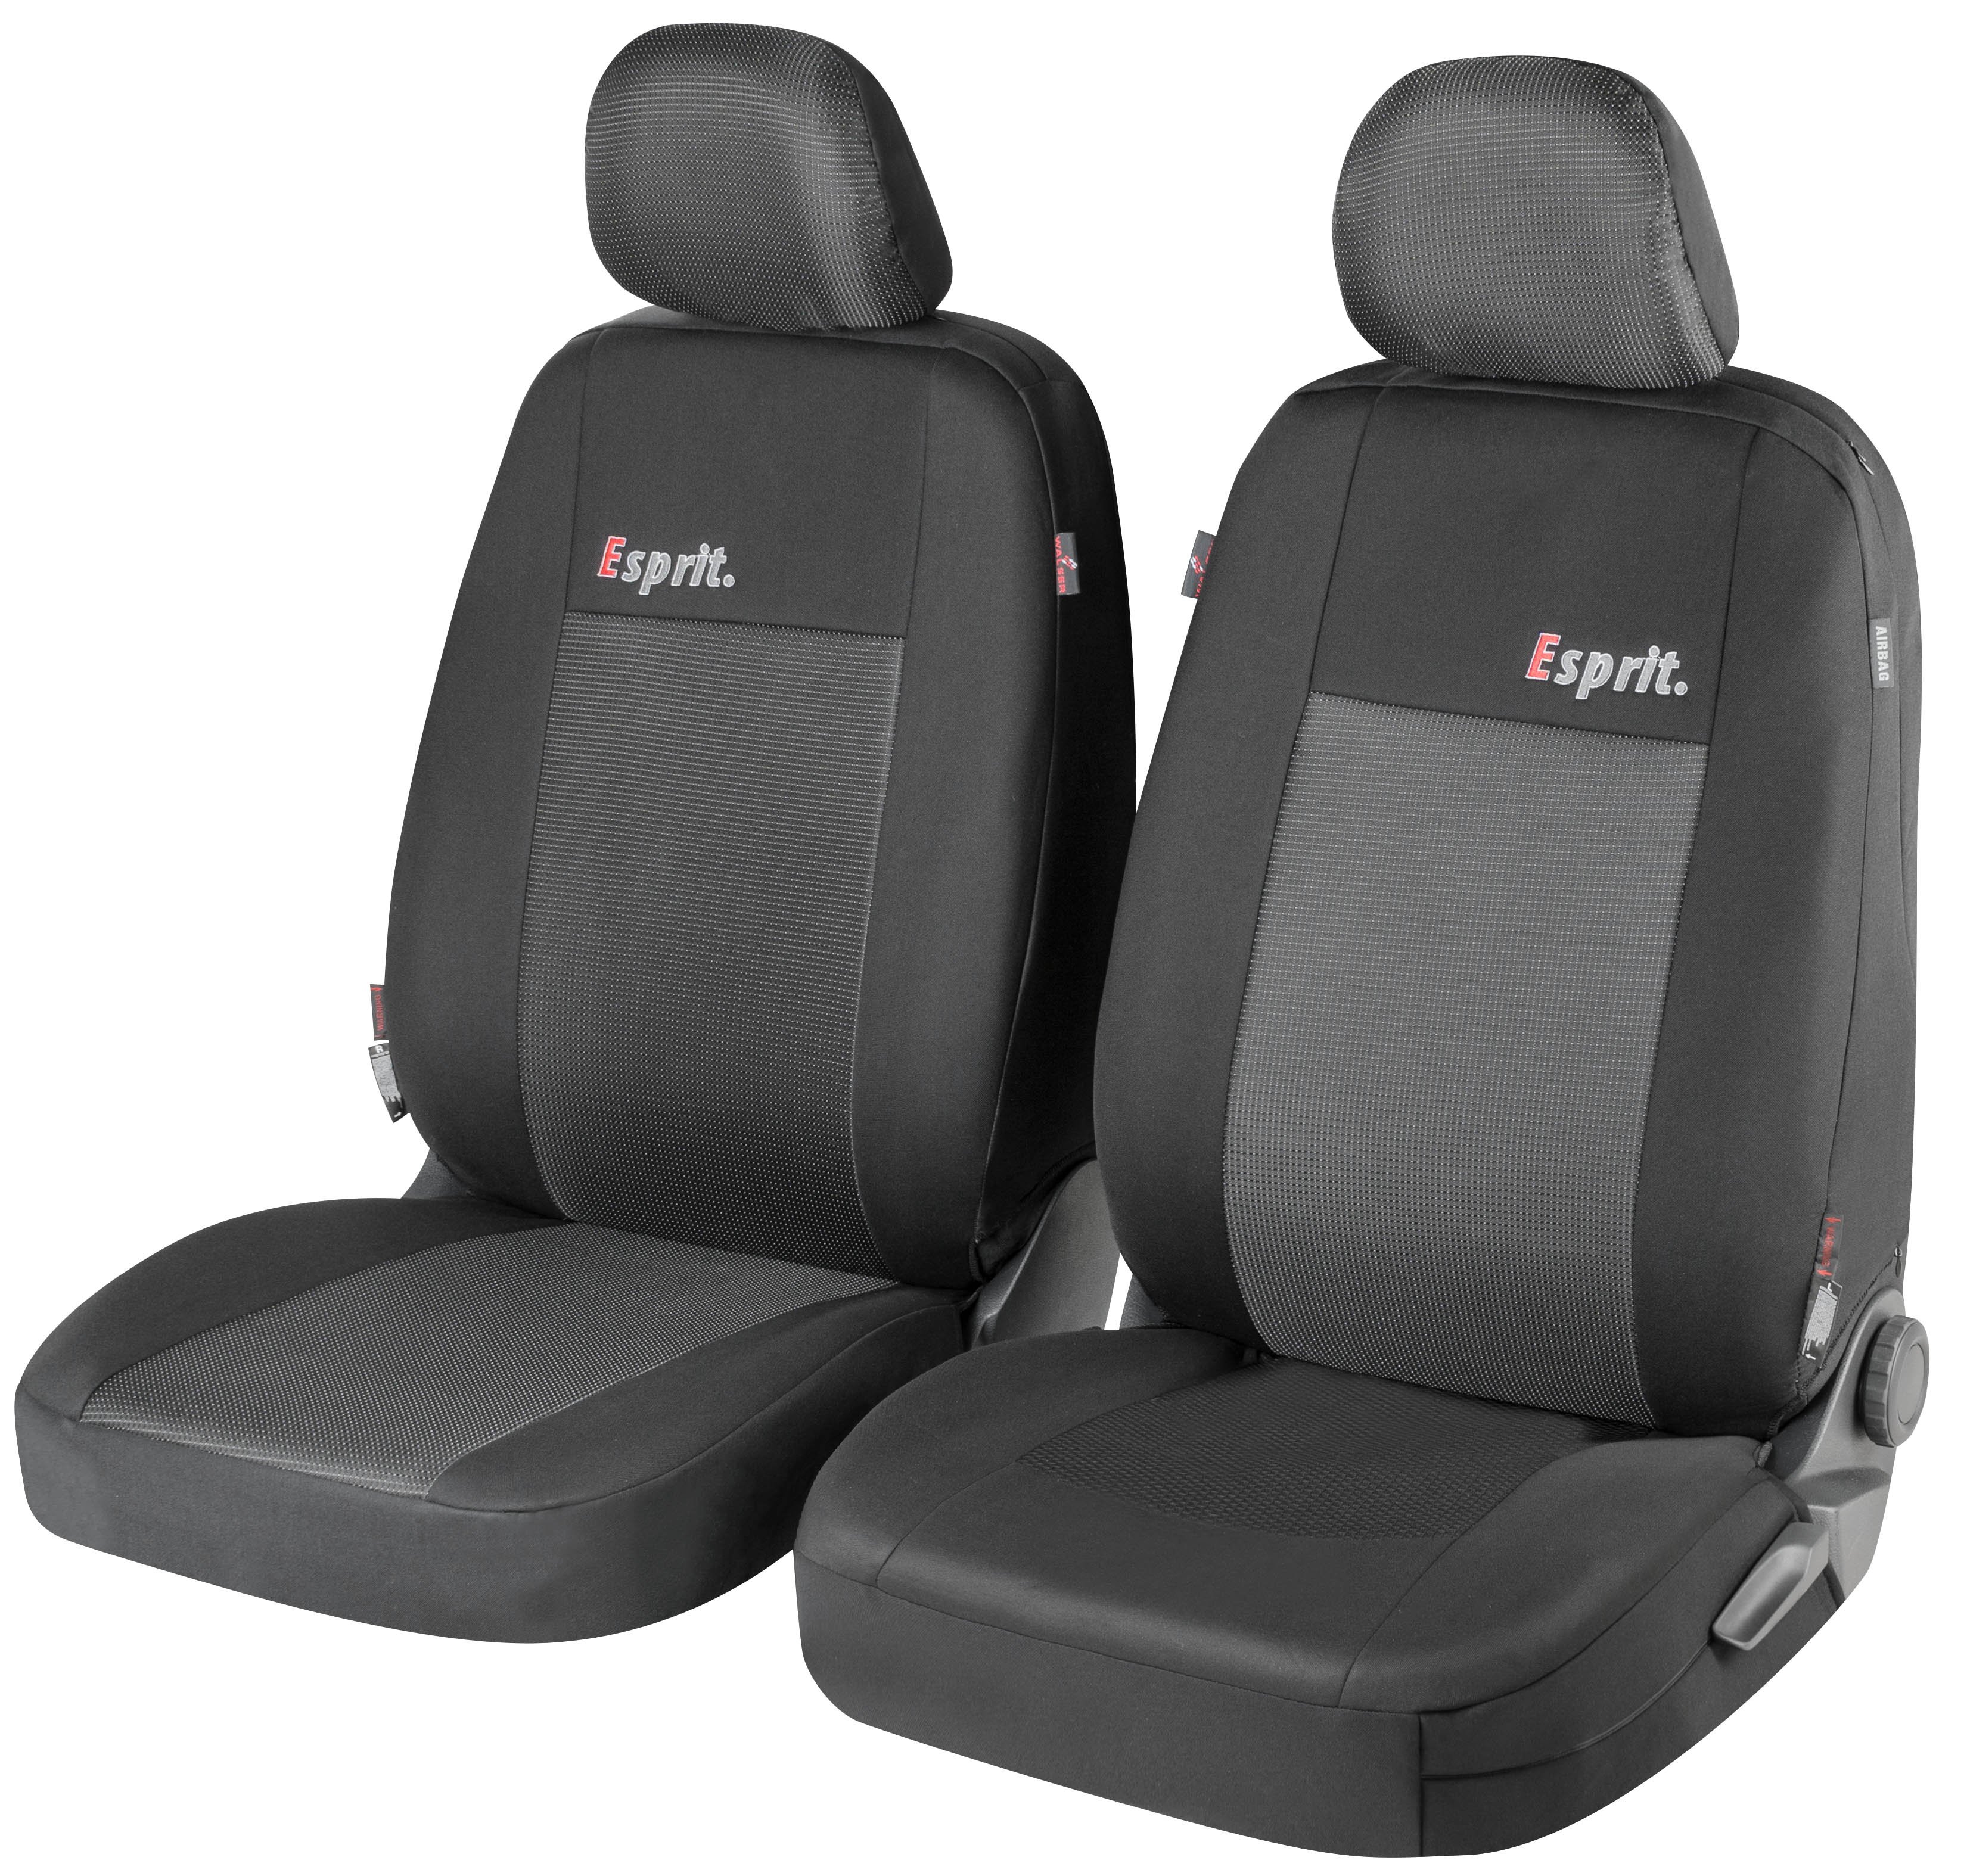 ZIPP IT Premium Esprit coprisedili auto per 2 sedili anteriori con sistema zip, sedili normali